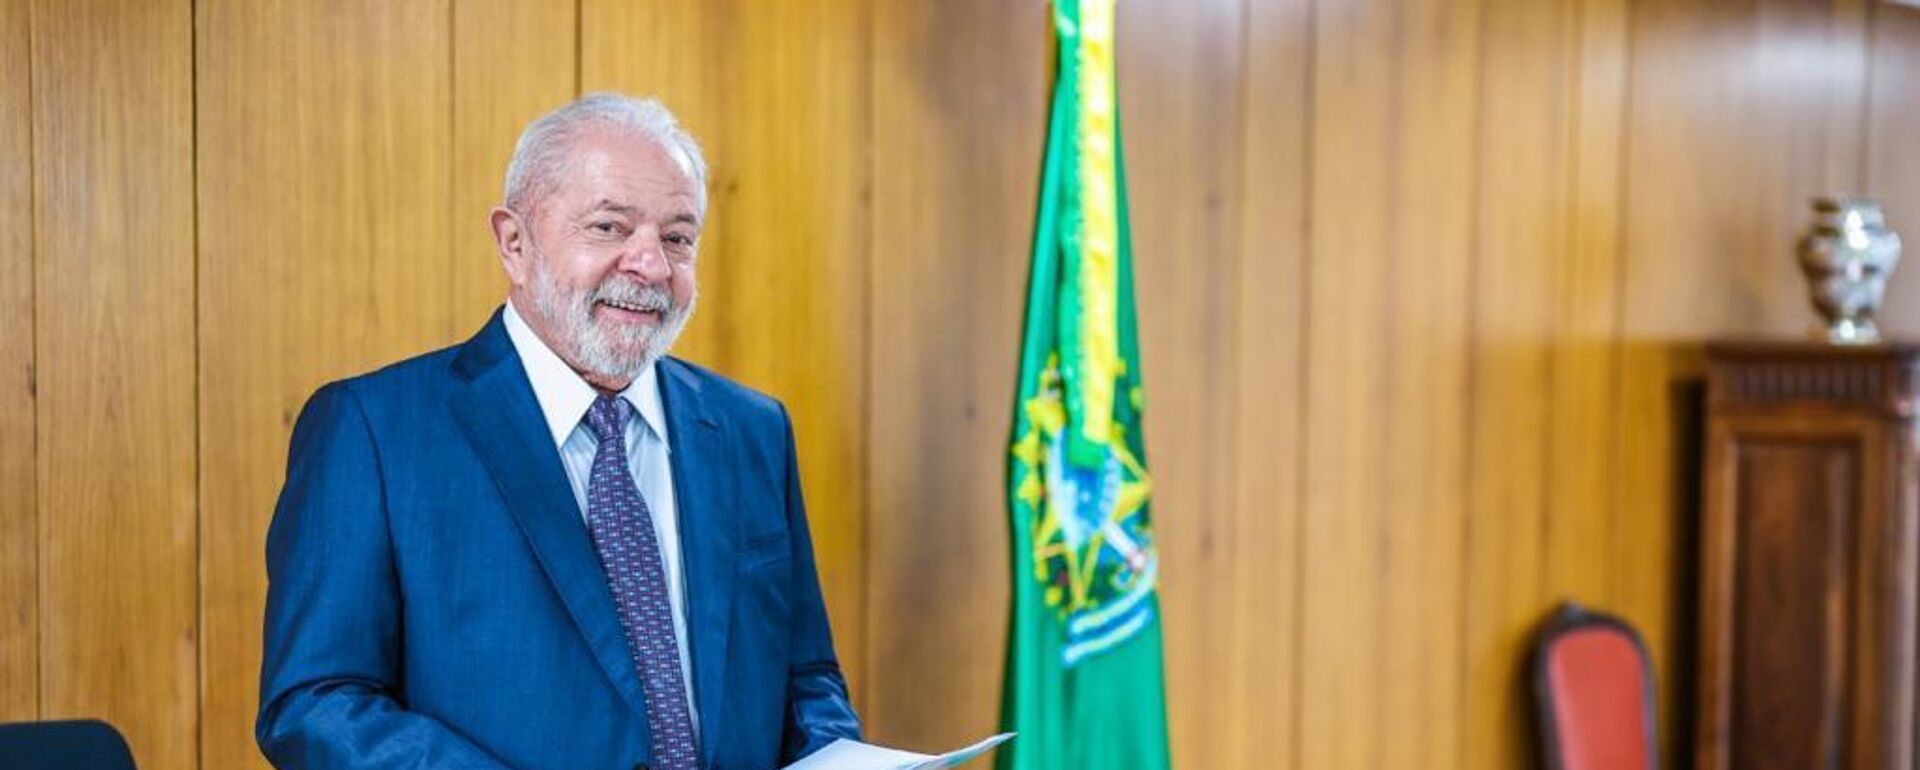 Luiz Inácio Lula da Silva no gabinete presidencial. Brasília, 4 de janeiro de 2022  - Sputnik Brasil, 1920, 21.01.2023